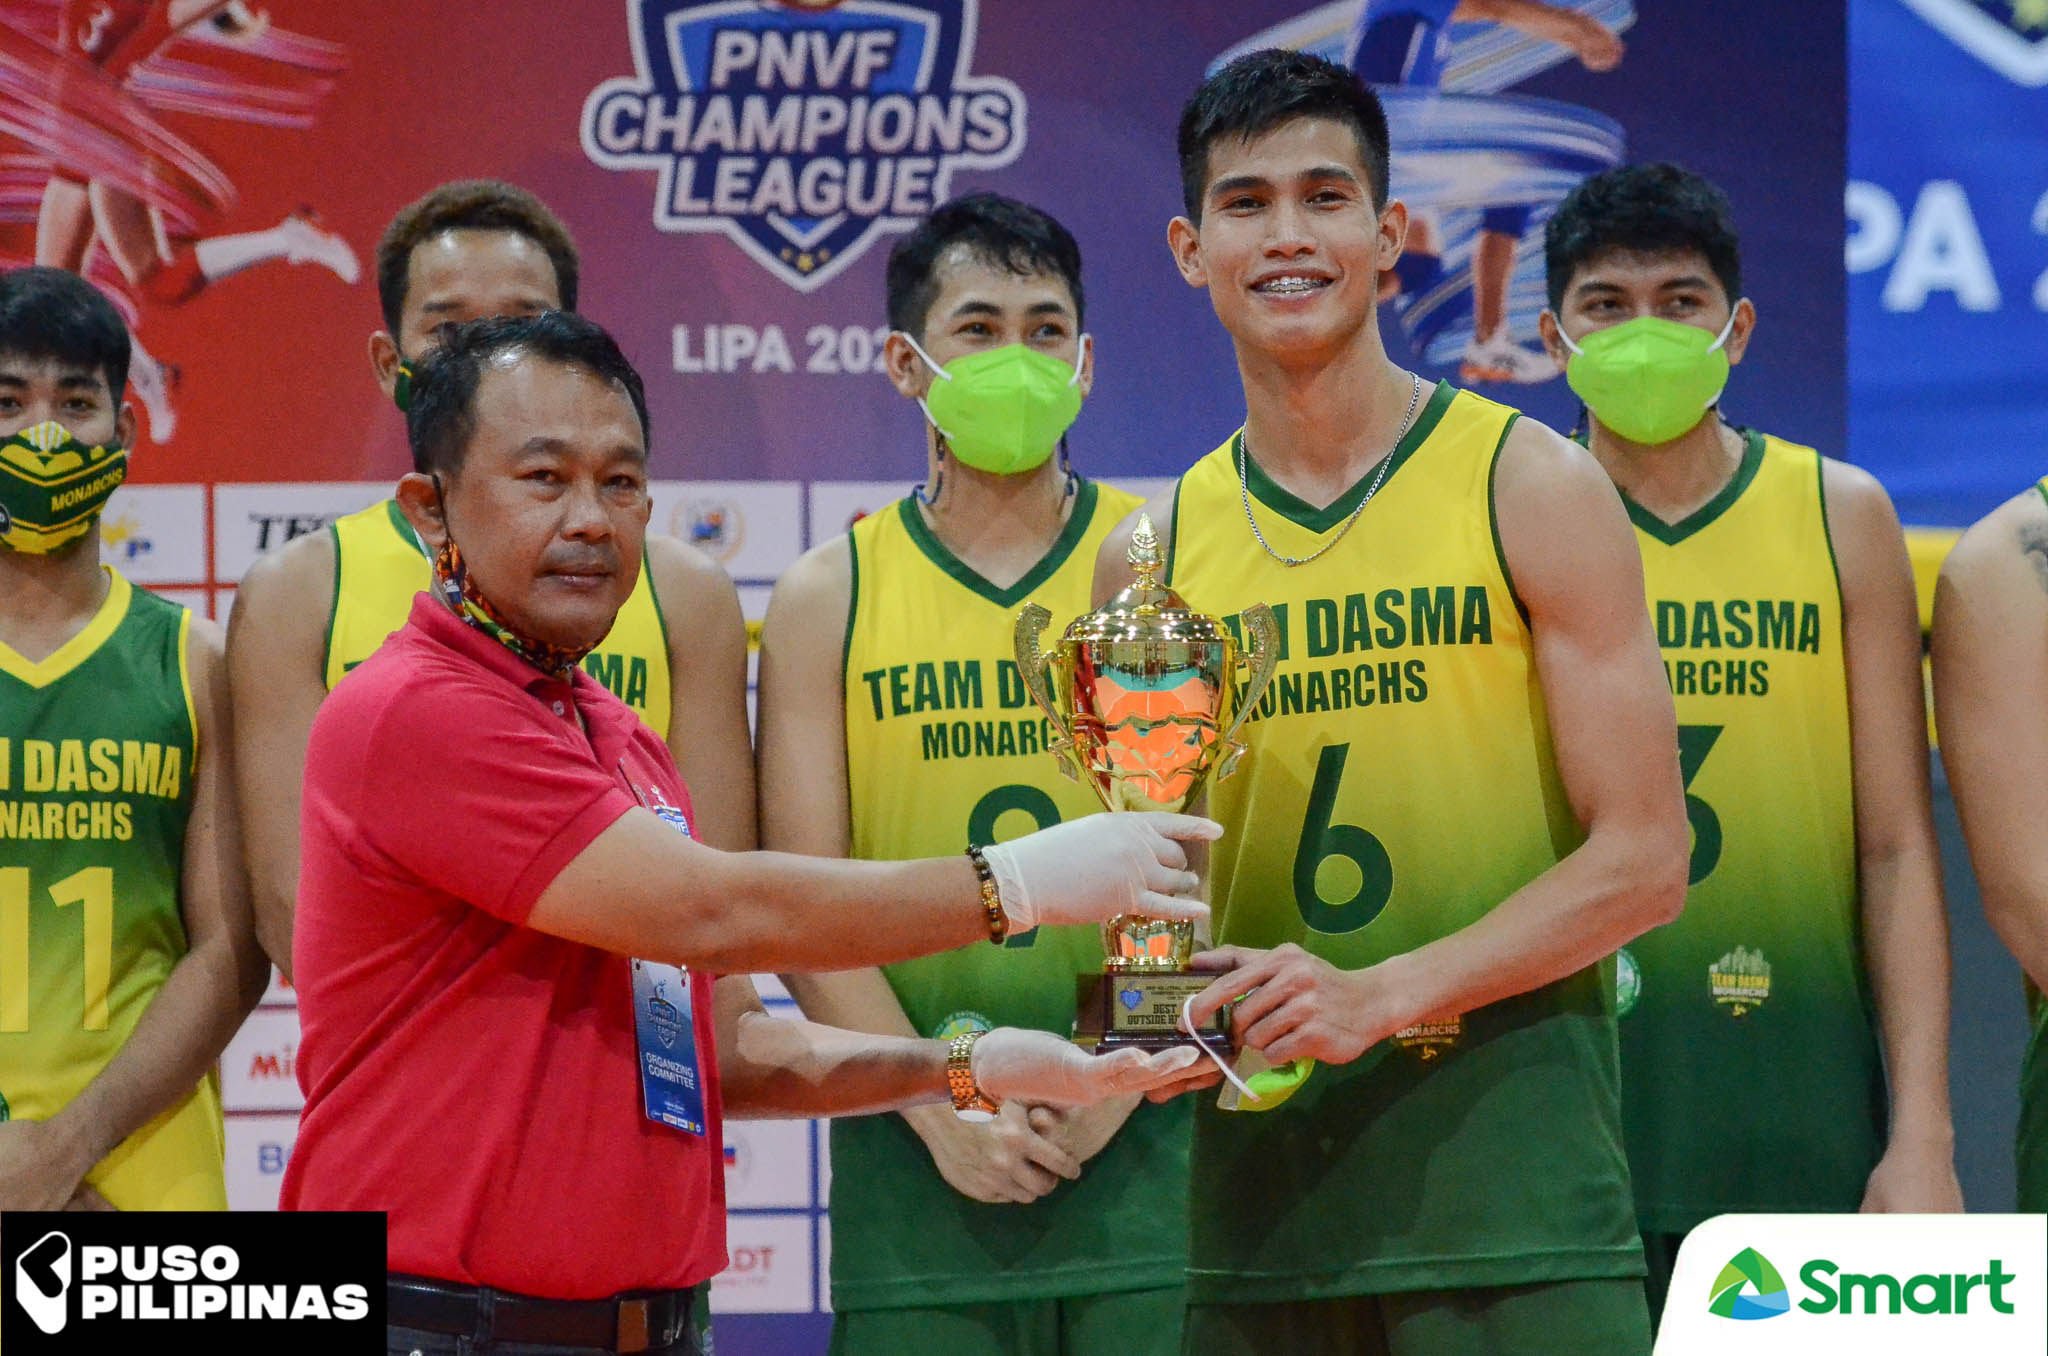 PNVF-Air-Force-vs.-Dasma-Calado-1080 After winning PNVFCL MVP, Mark Calado eyes National Team News Volleyball  - philippine sports news